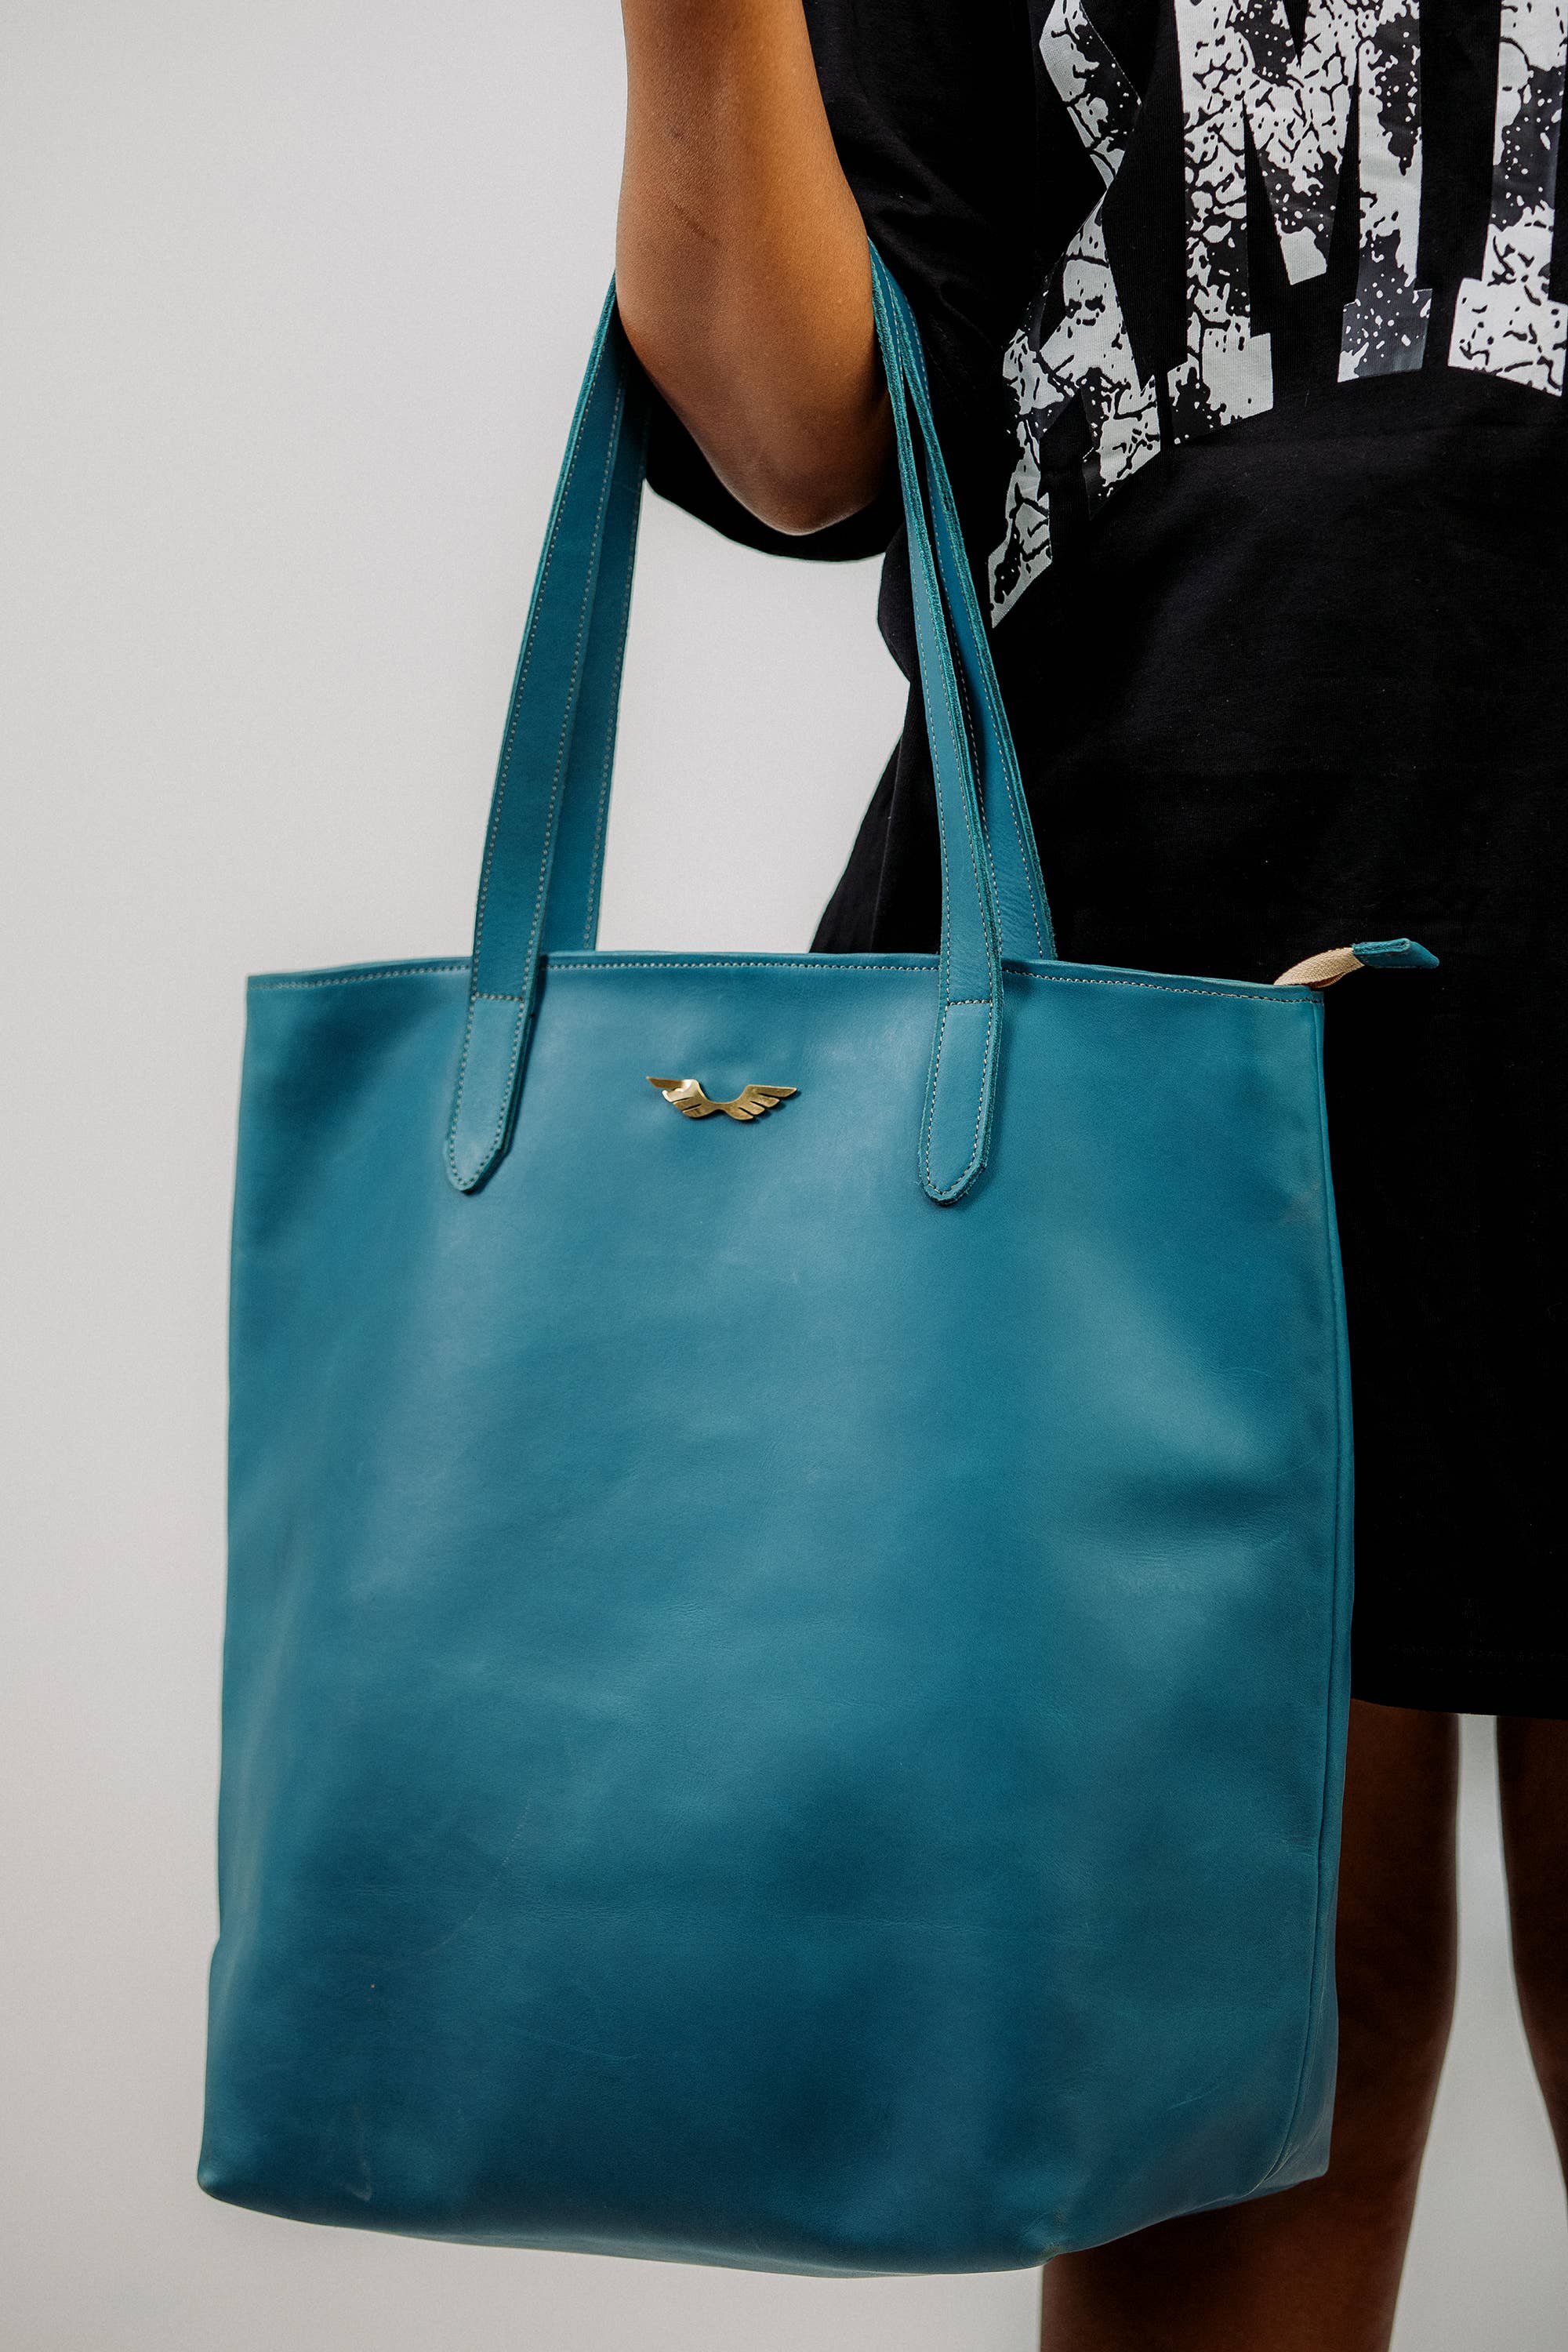 Sseko Designs has a Bag for Every Occasion - Green Acres Meets Paris